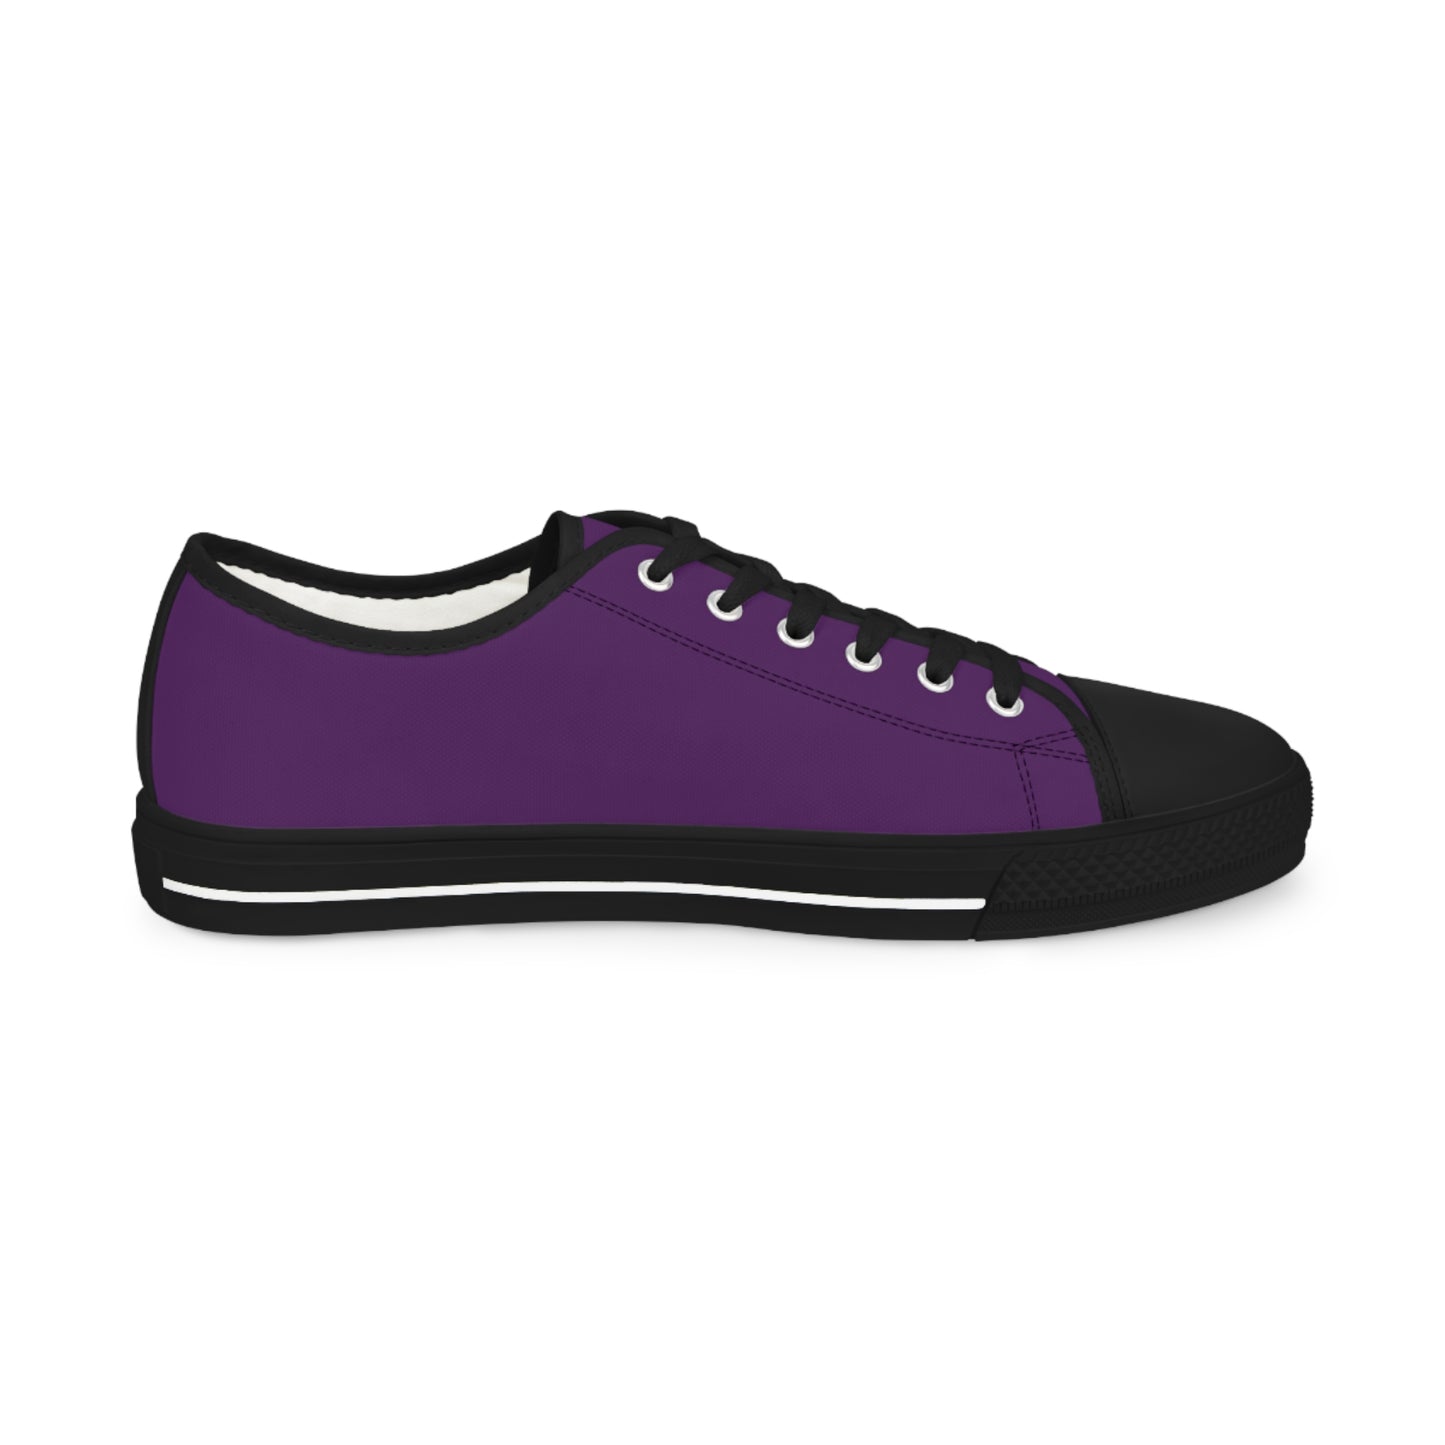 Men's Canvas Low Top Solid Color Sneakers - Royal Purple US 14 Black sole